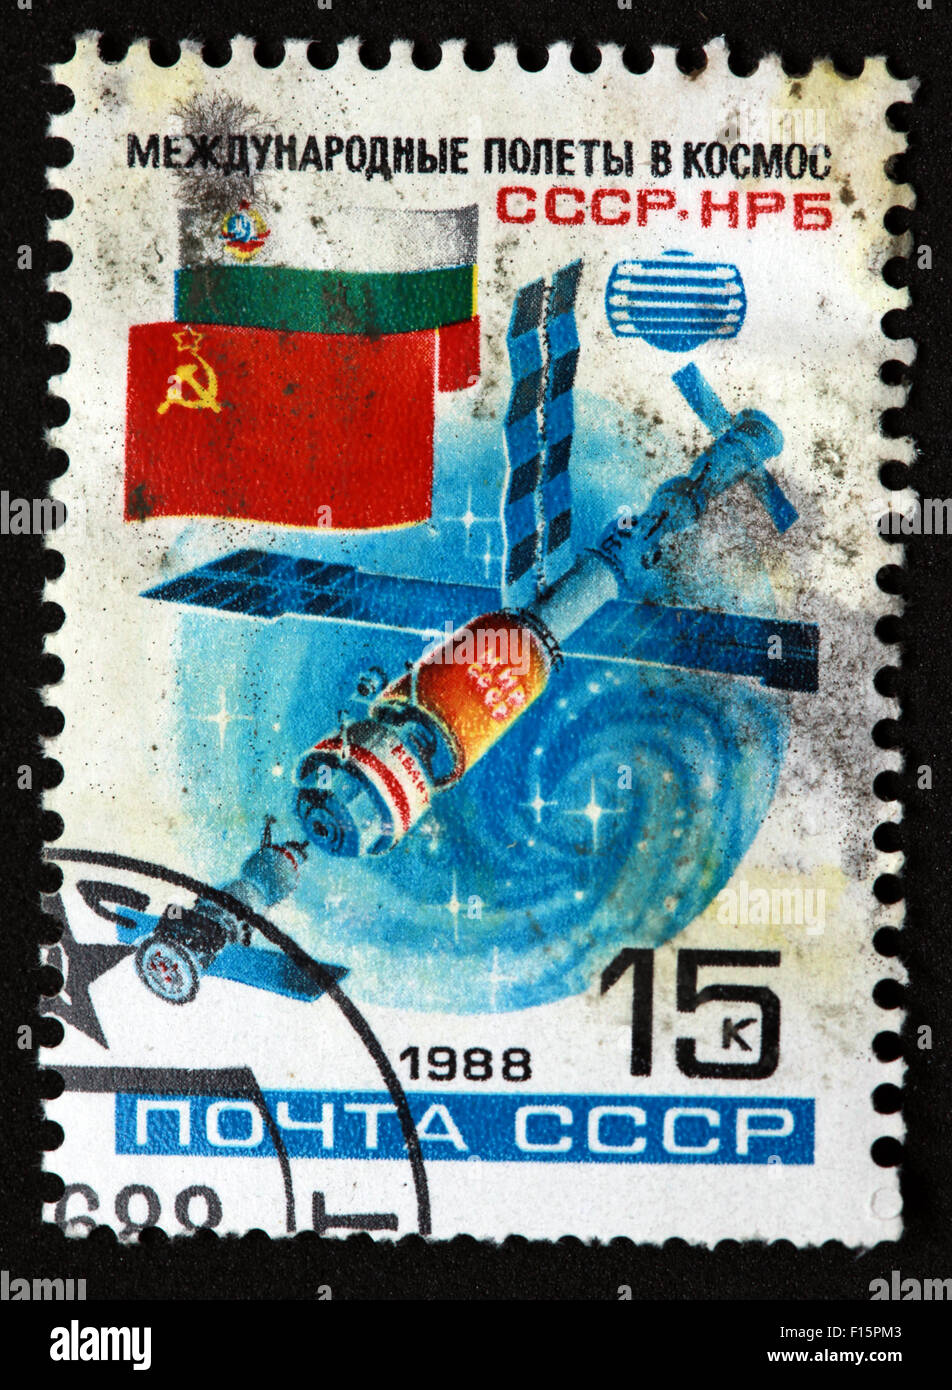 CCCP URSS HP5 veicolo spaziale bandiere timbro 1988 timbro Foto Stock